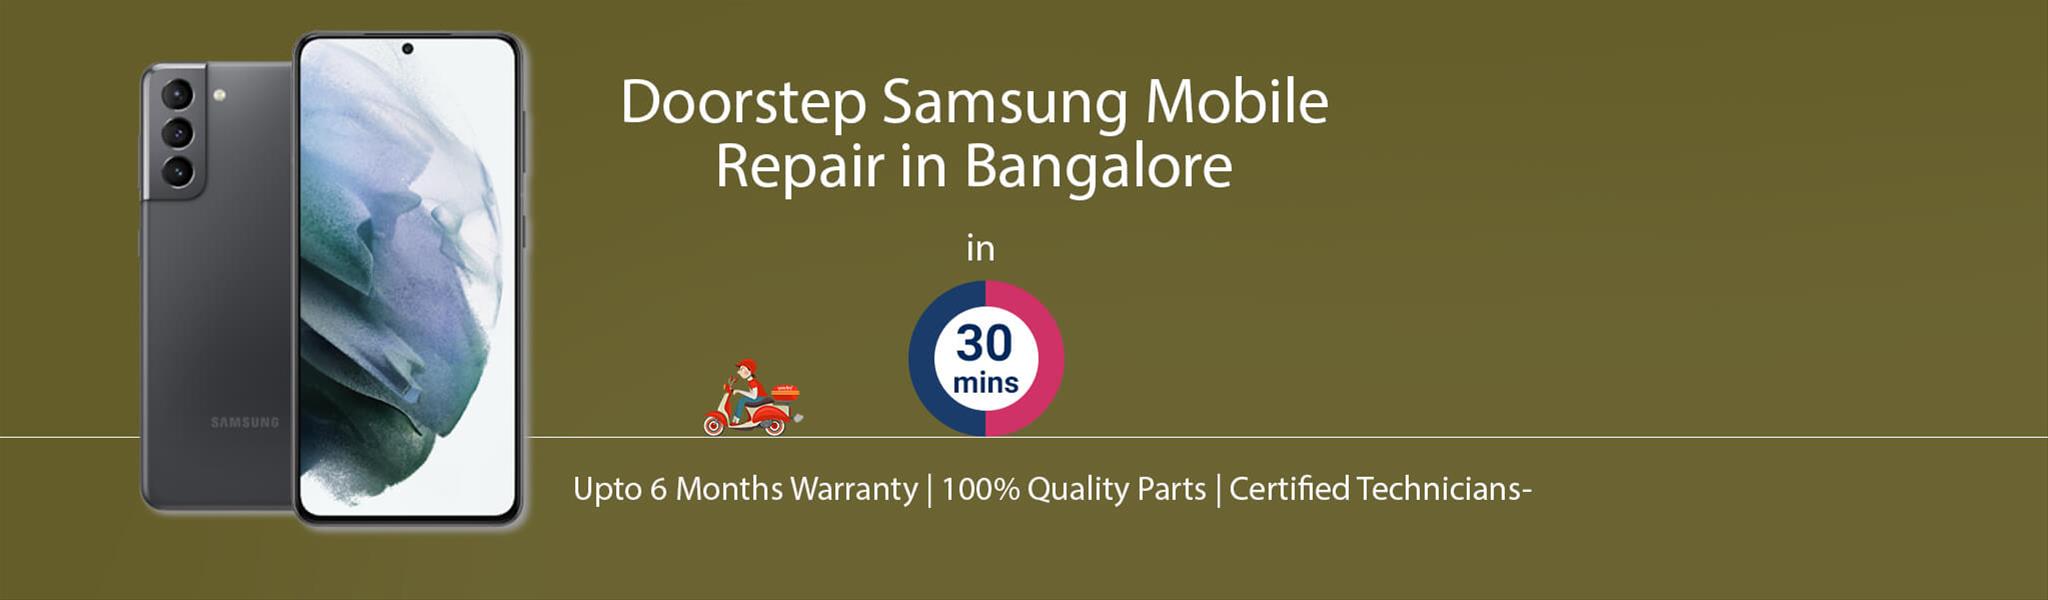 samsung-repair-service-banner-bangalore.jpg